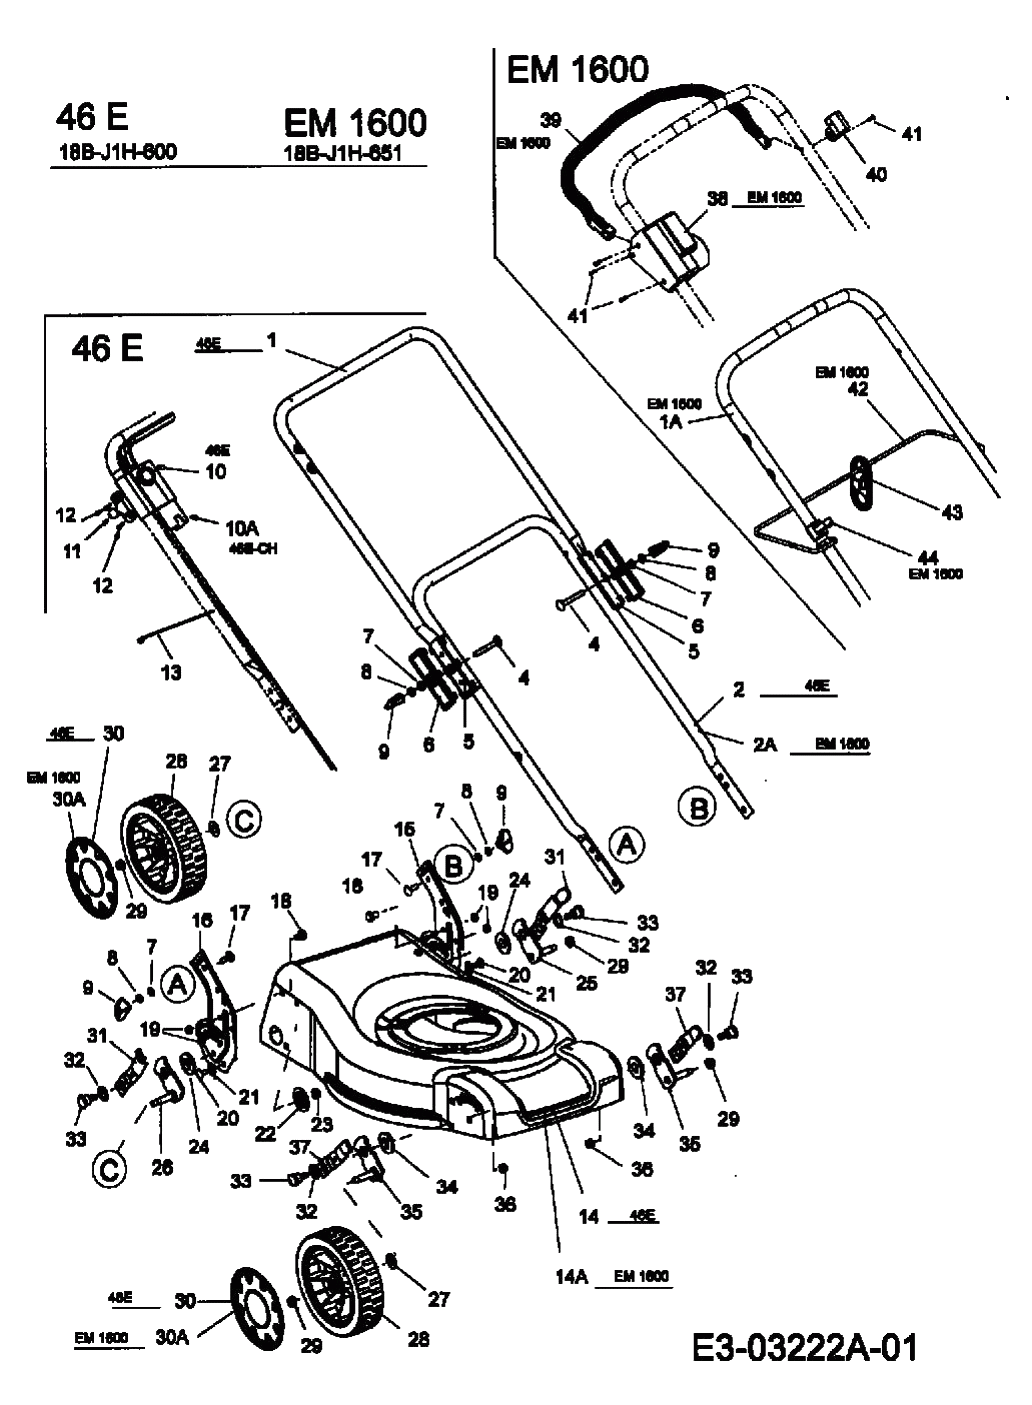 MTD Артикул 18B-J1H-600 (год выпуска 2007). Ручка, колеса, регулятор высоты реза